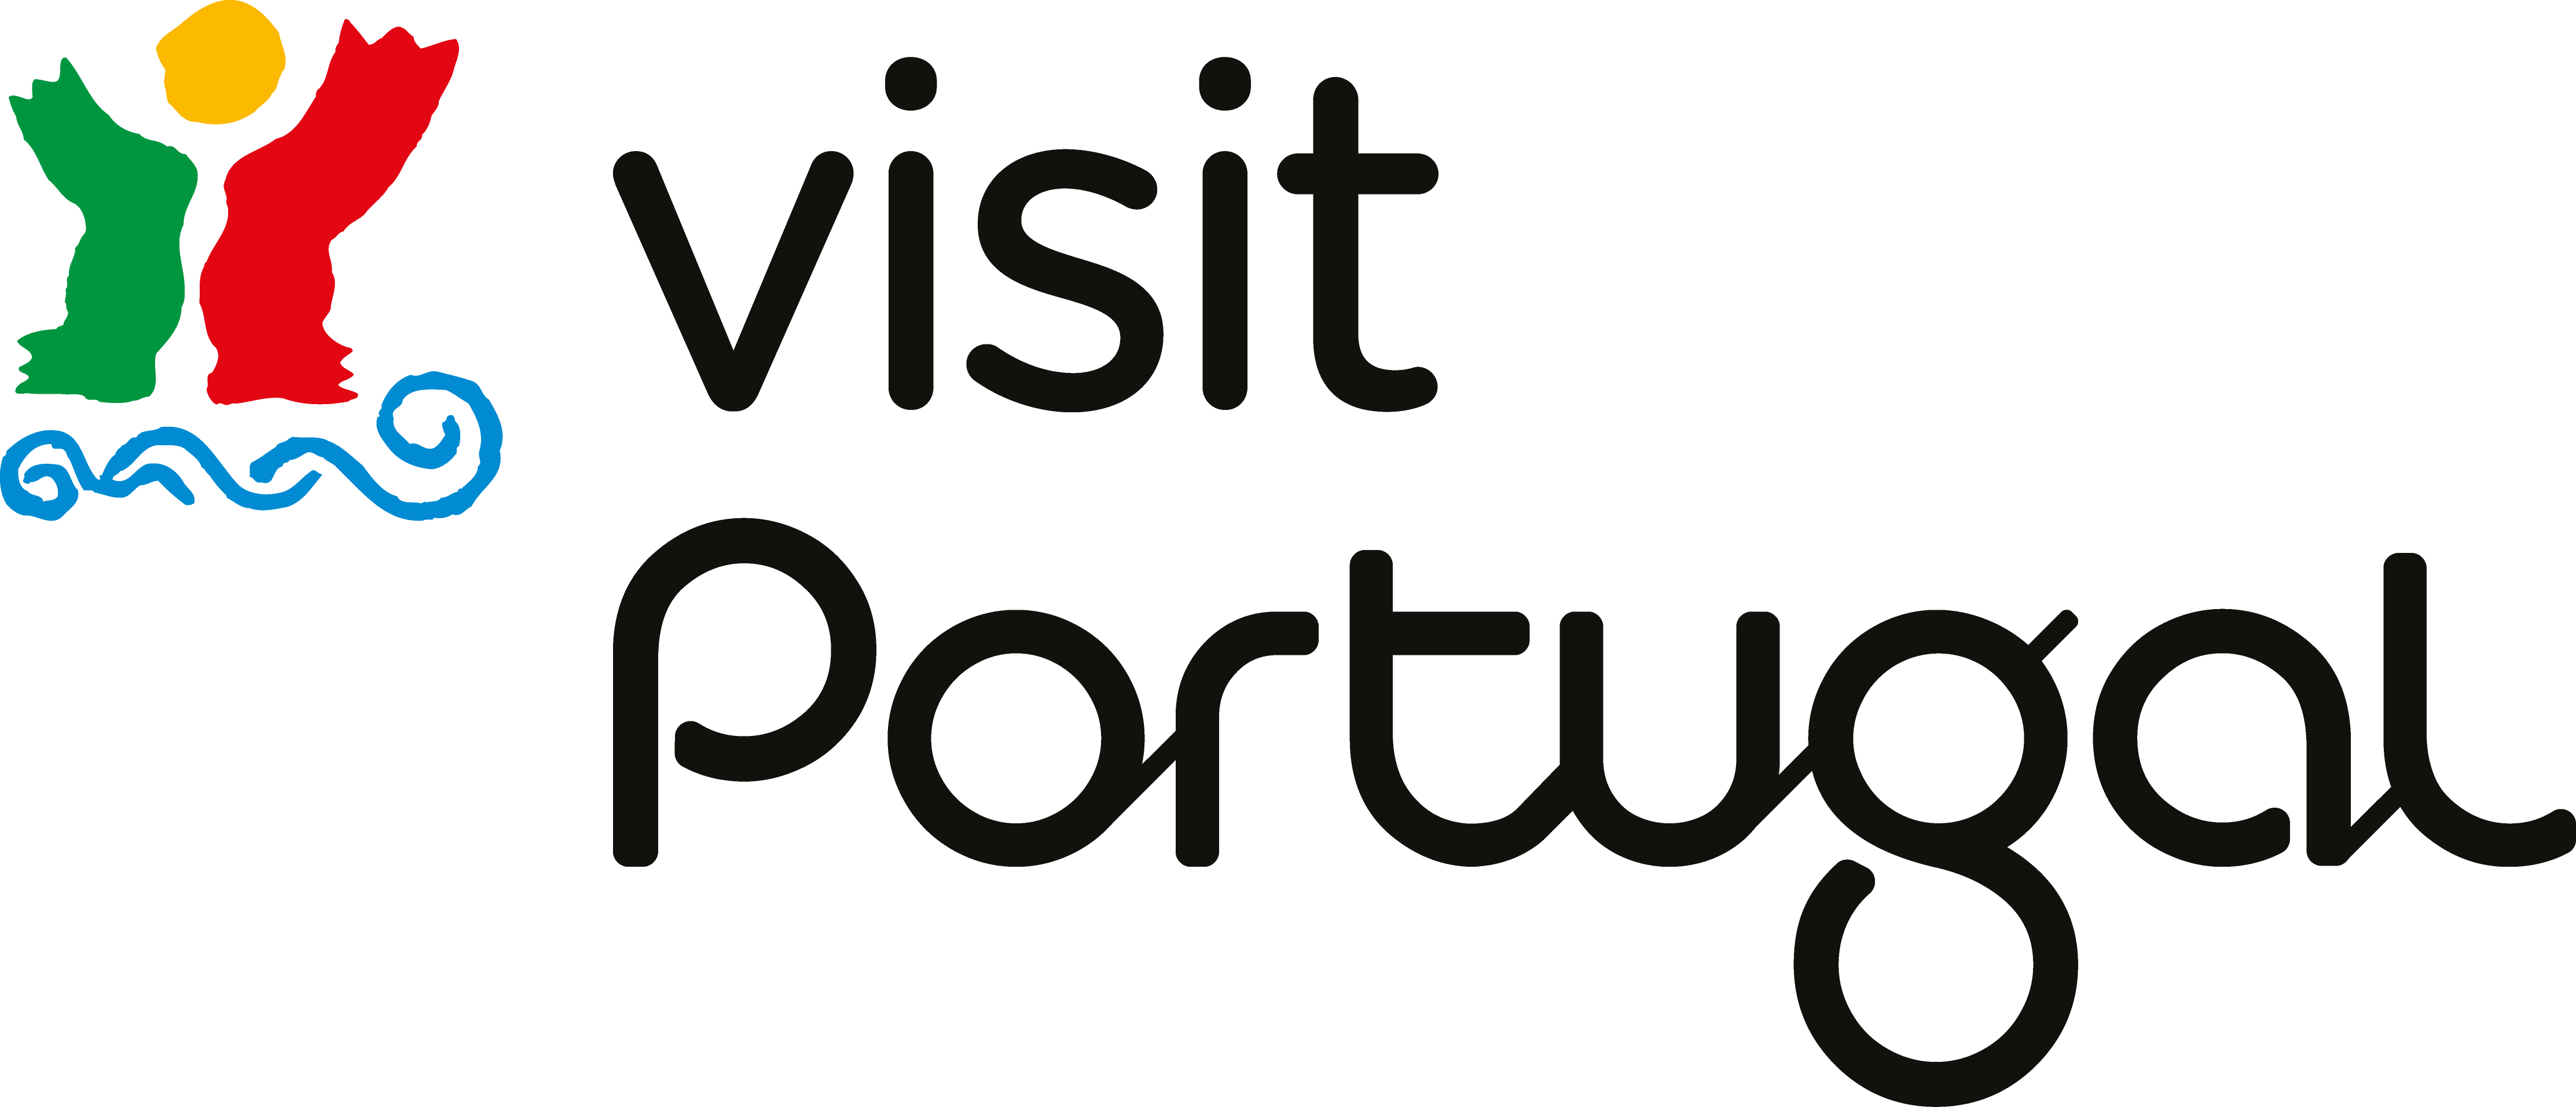 Visit Portugal Logo